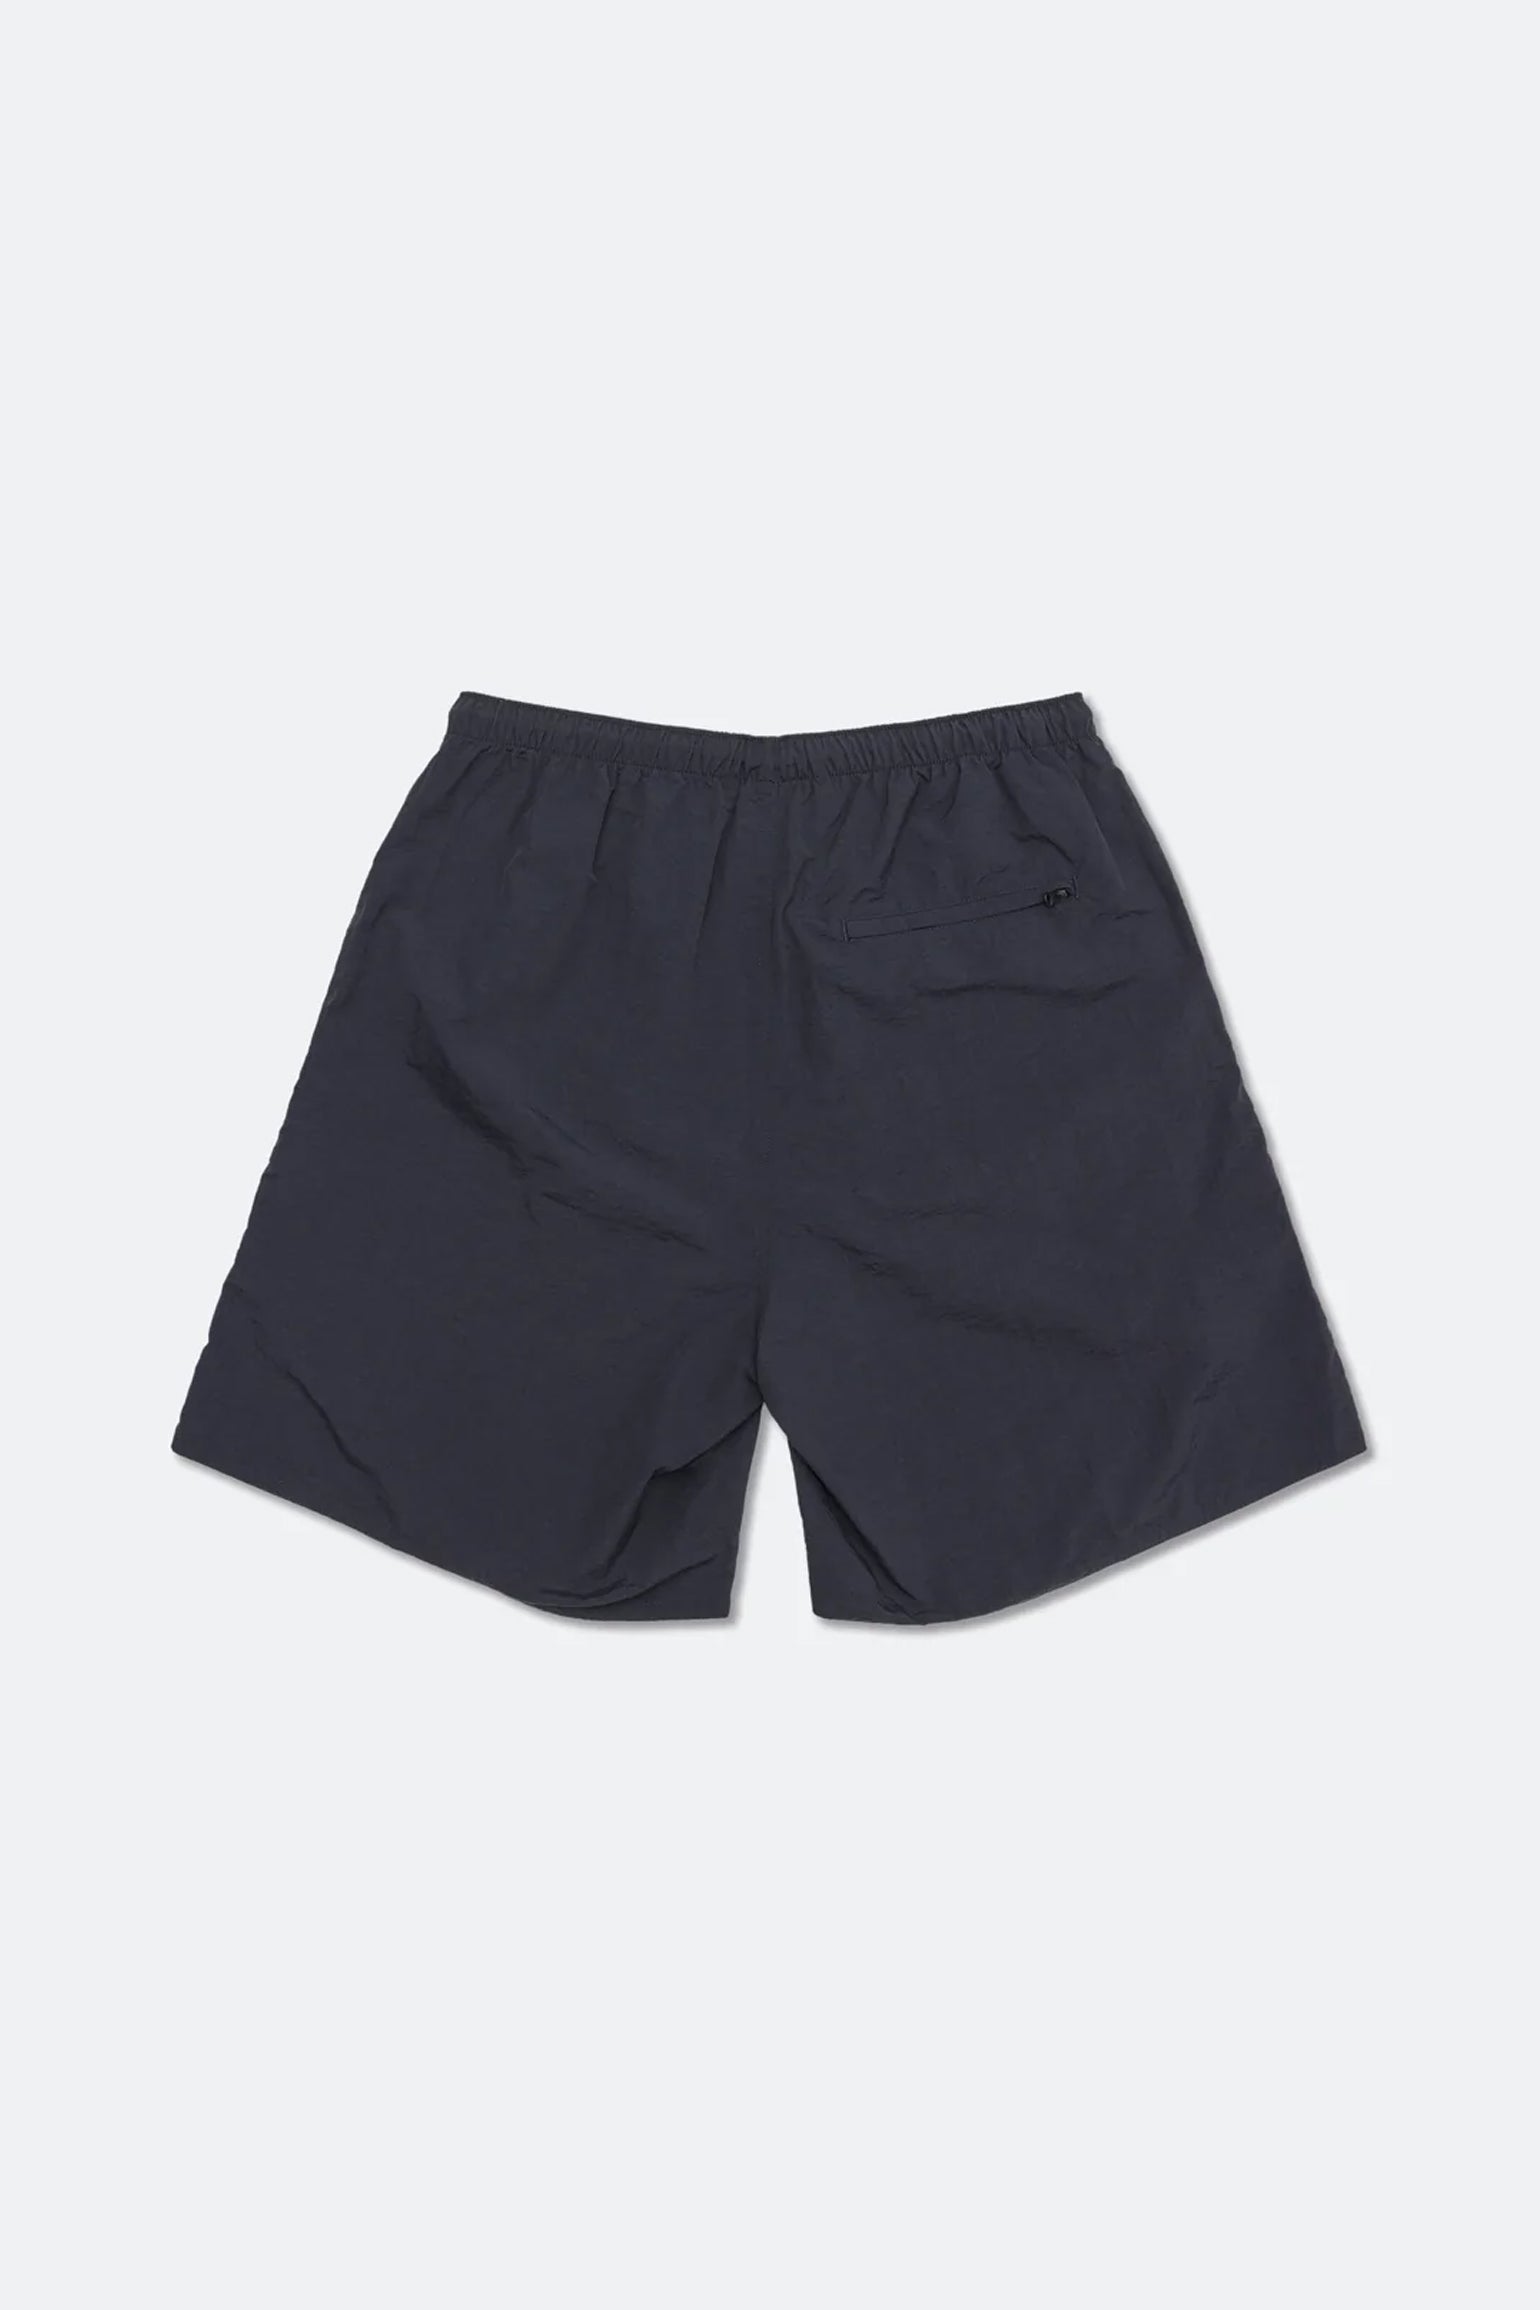 NVGTN Solid Seamless Shorts - Olive